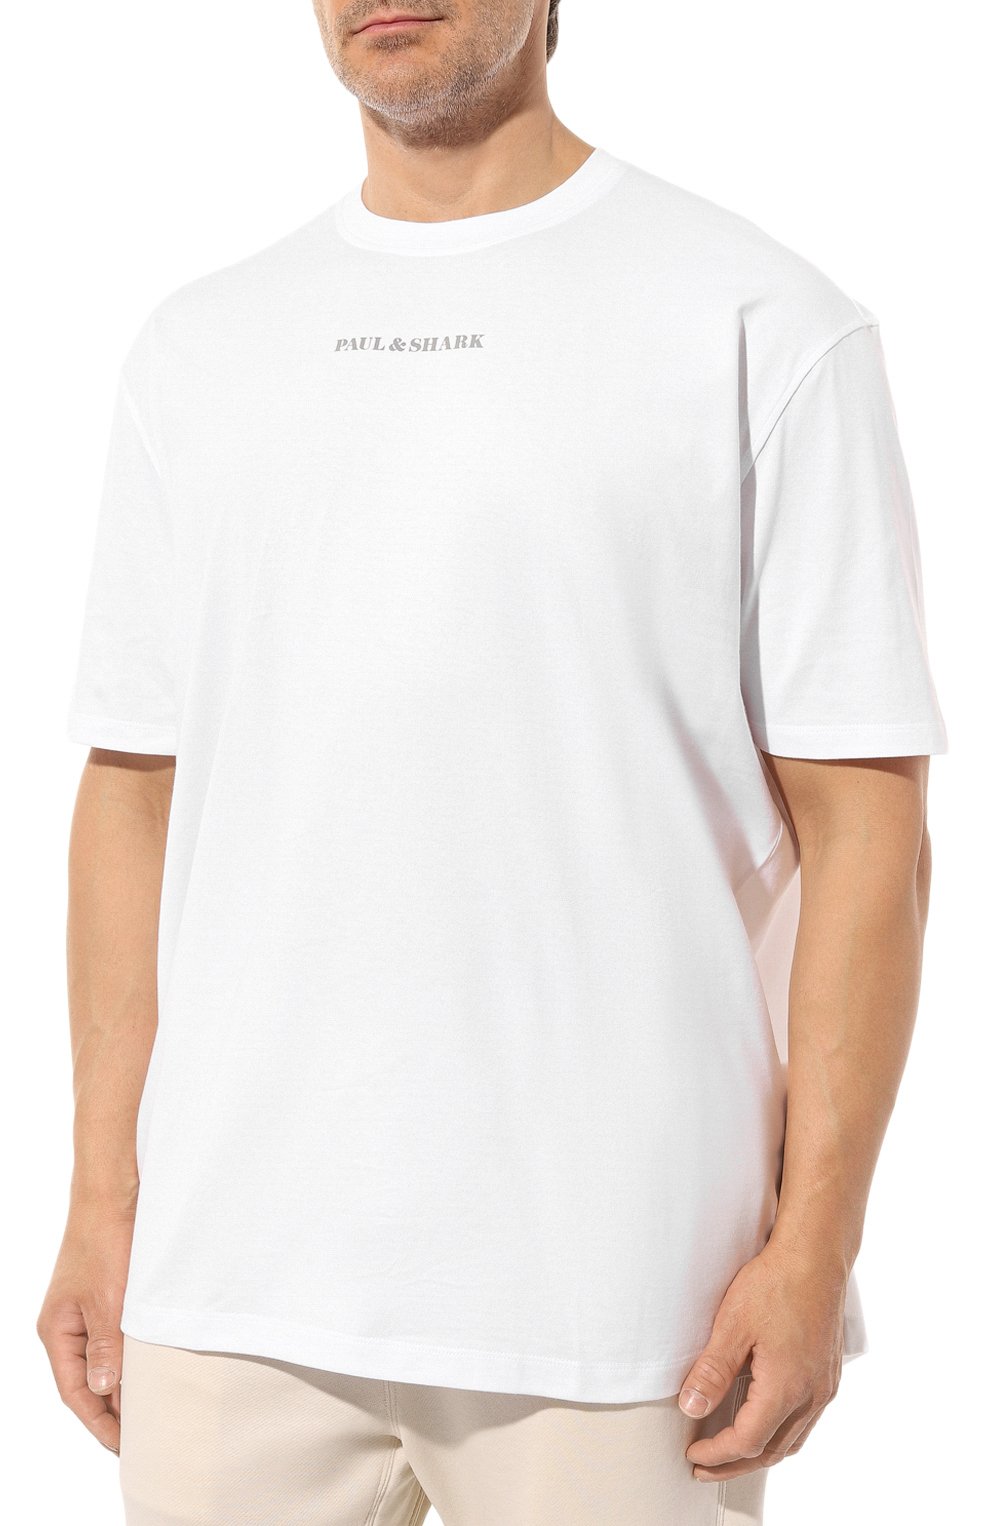 Хлопковая футболка Paul&Shark 22411044/3XL-6XL, цвет белый, размер 58 22411044/3XL-6XL - фото 3